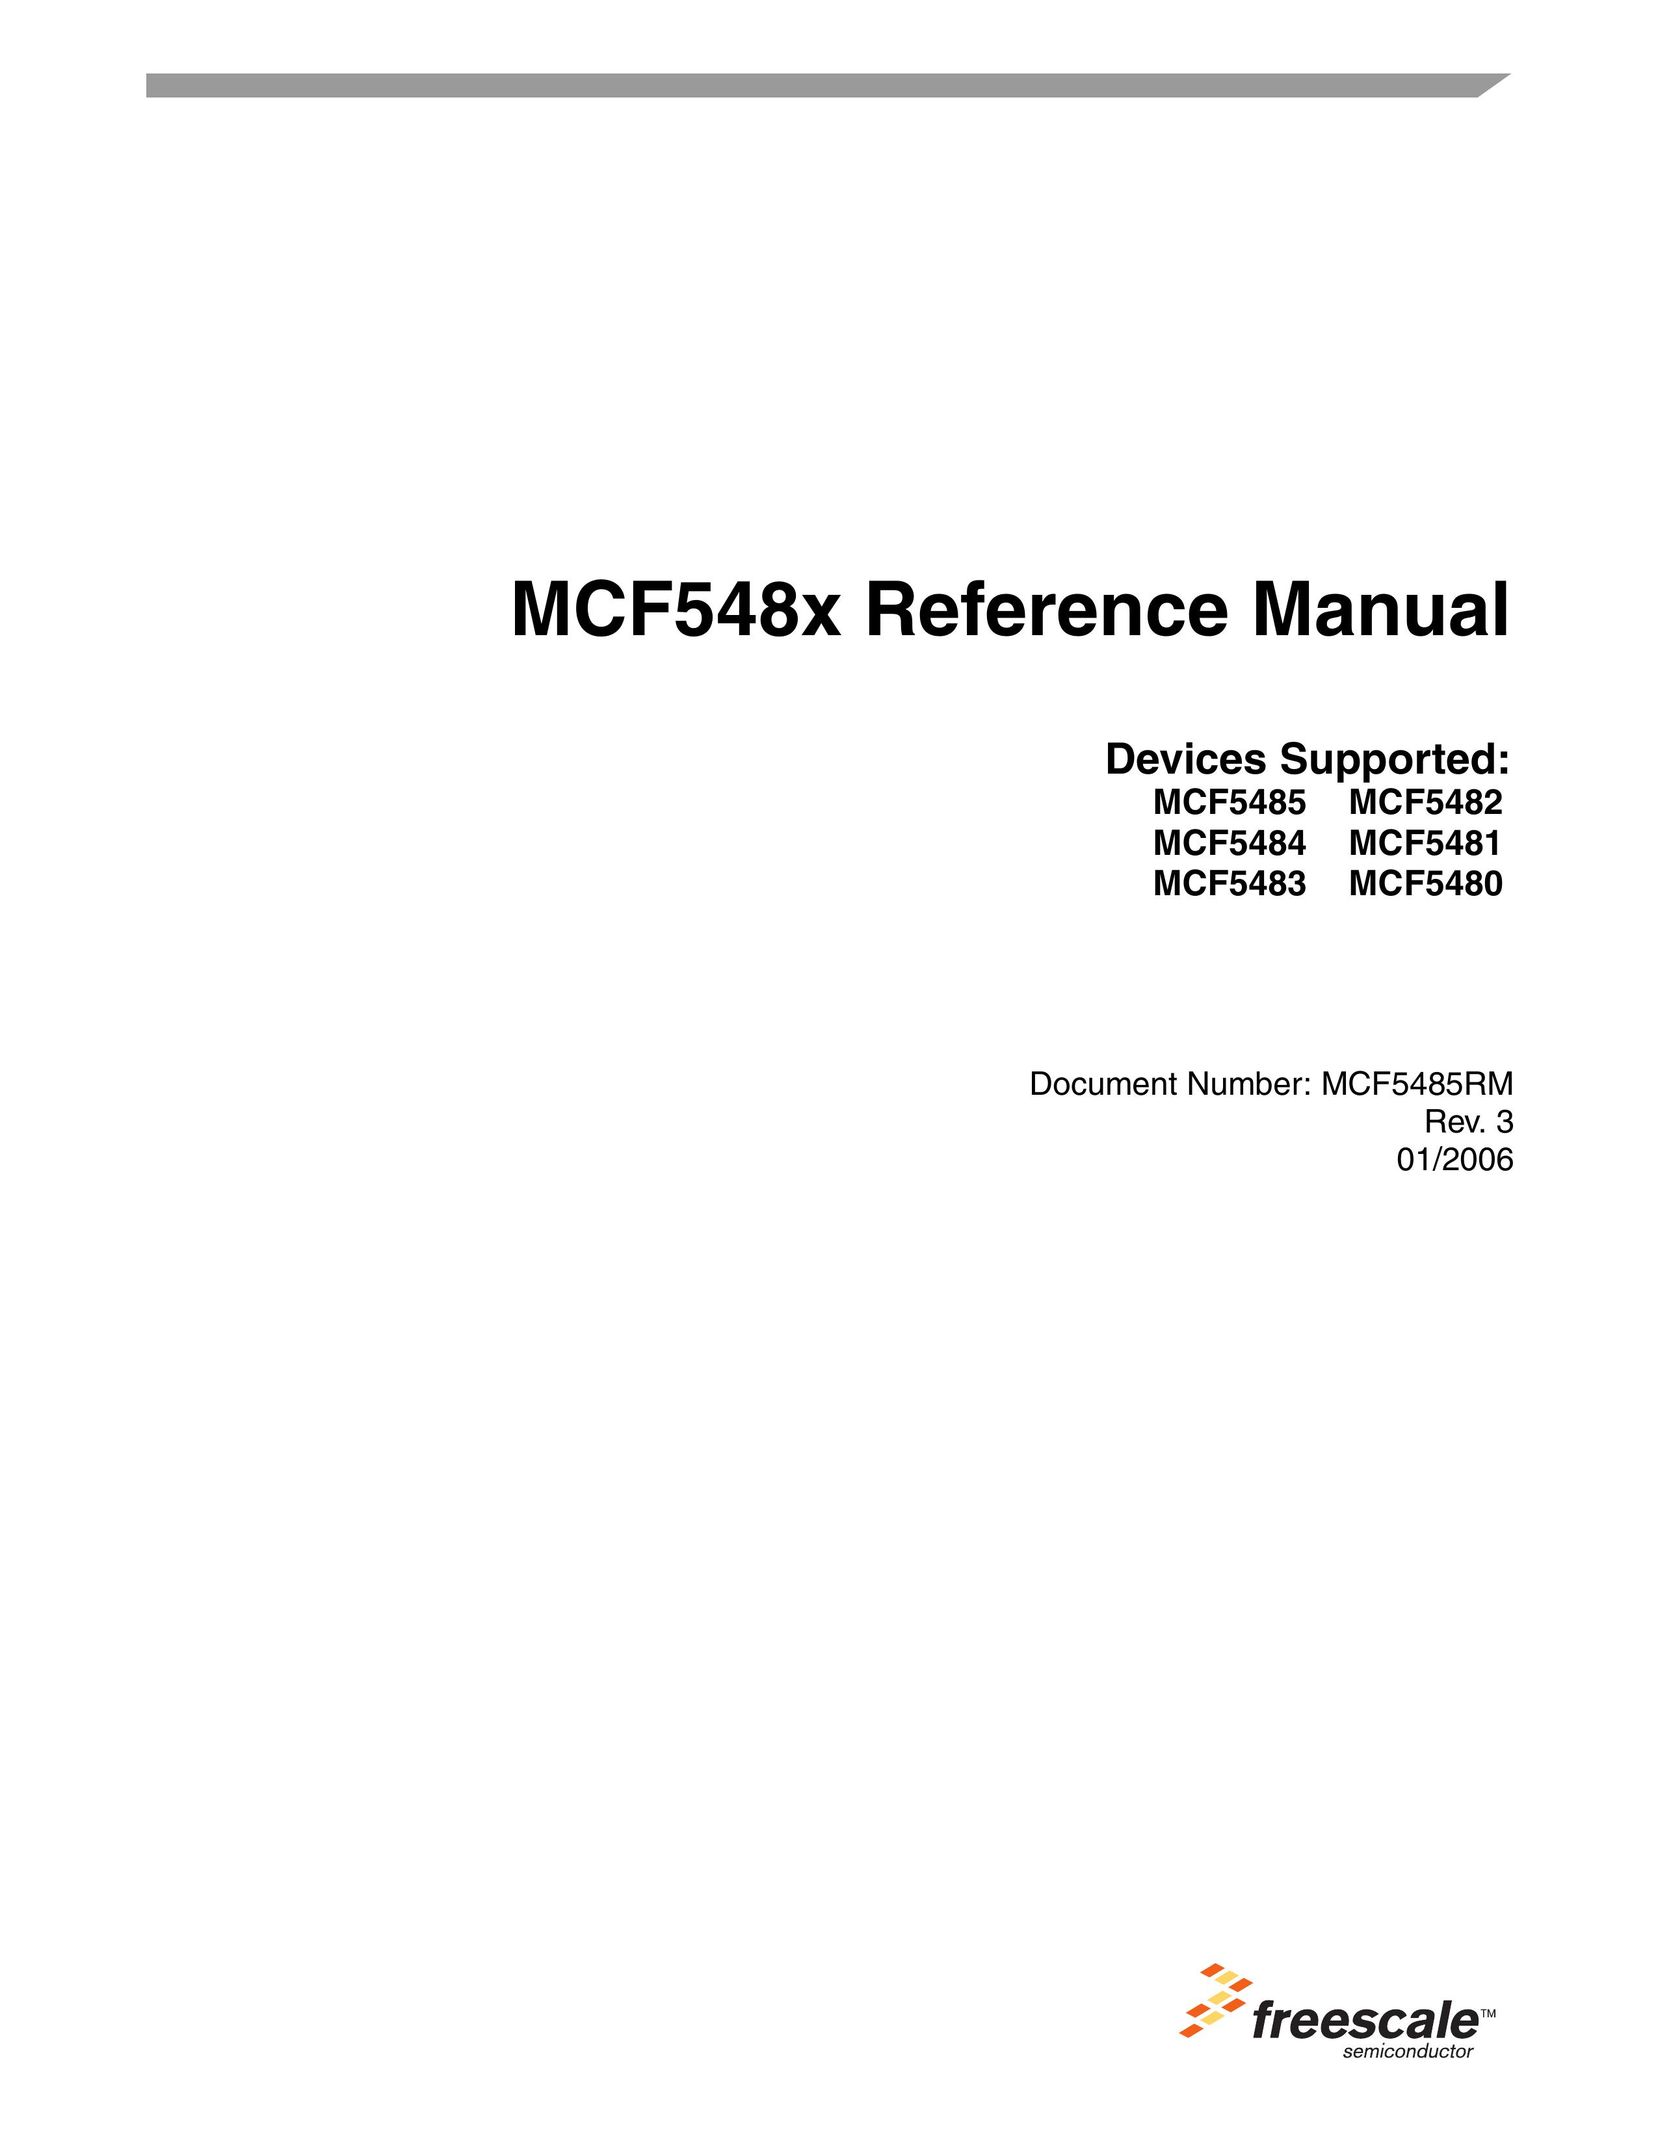 Freescale Semiconductor MCF5482 Computer Hardware User Manual